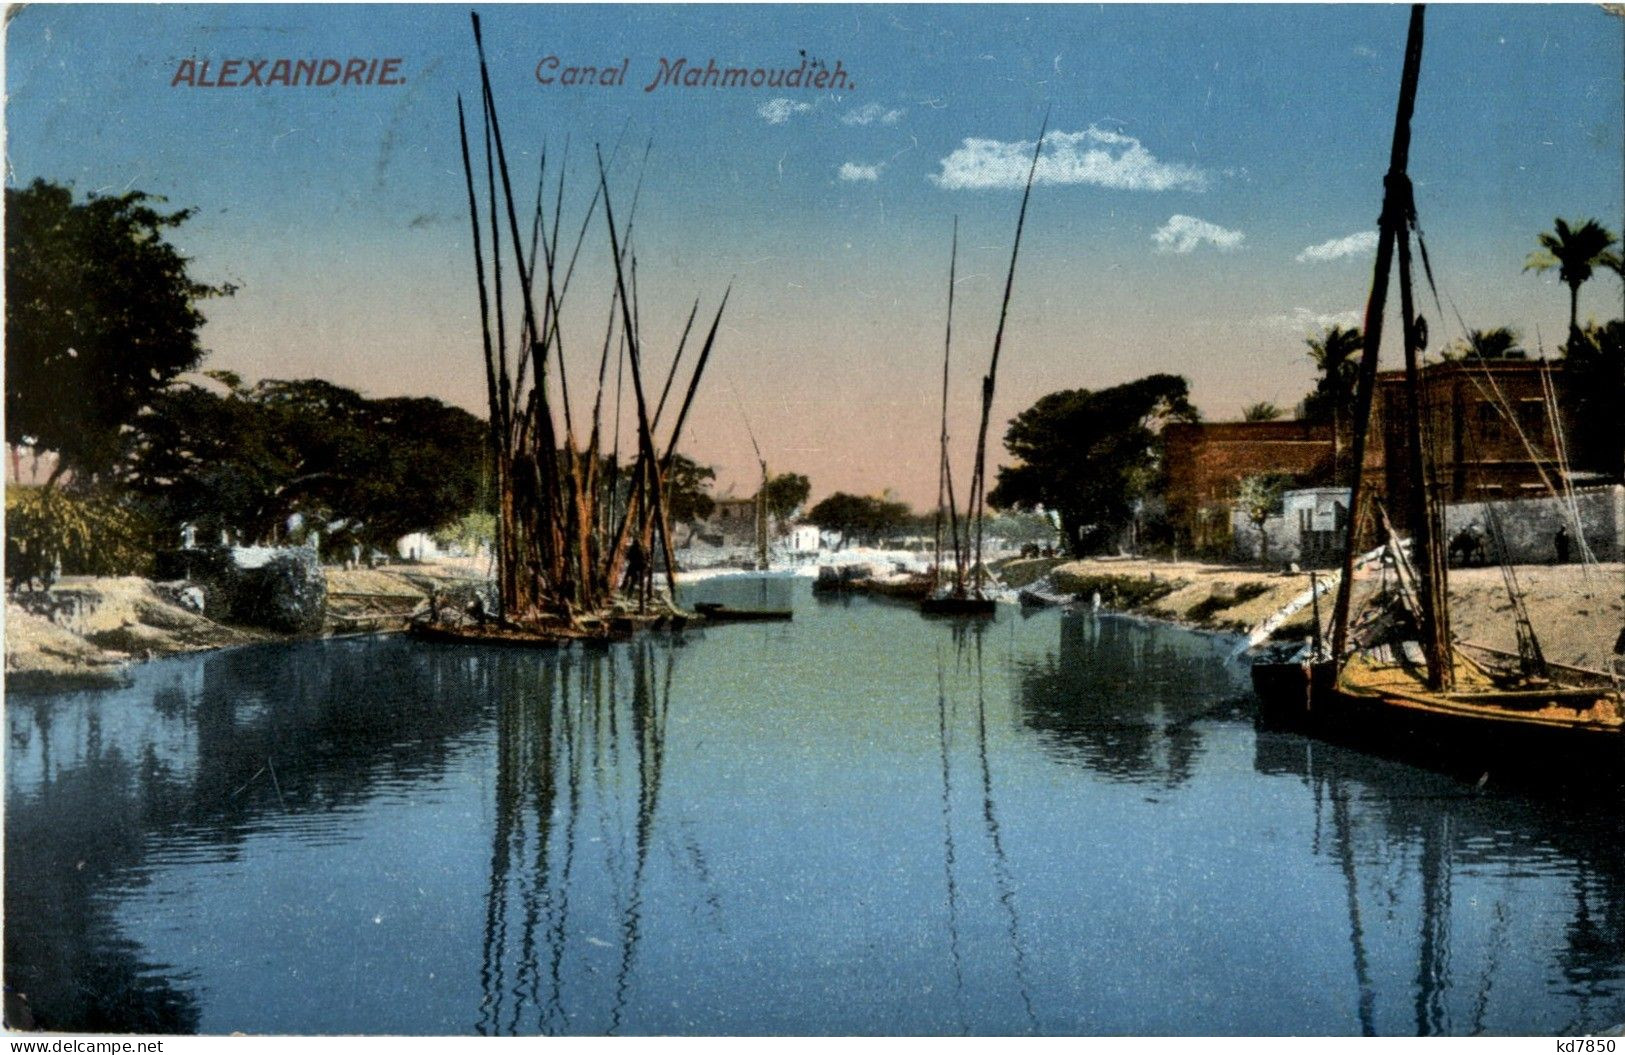 Alexandria - Canal Mahmoudieh - Alexandrië